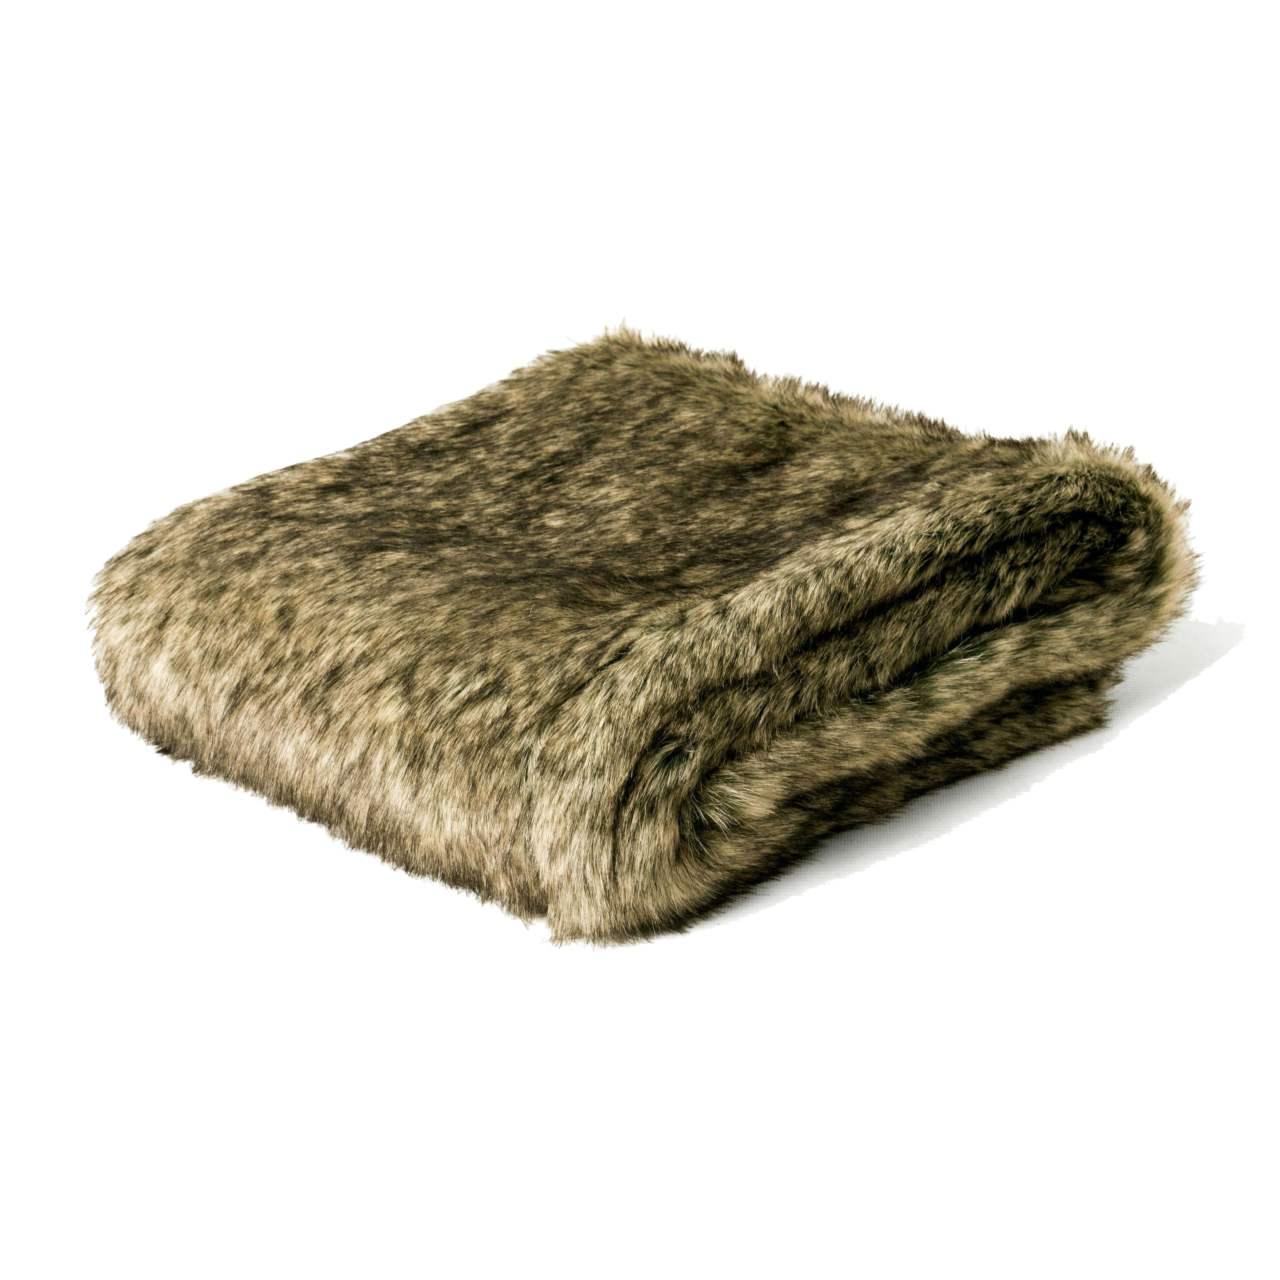 An image of Charley Chau Faux-Fur Blanket Wolf Grey, Large